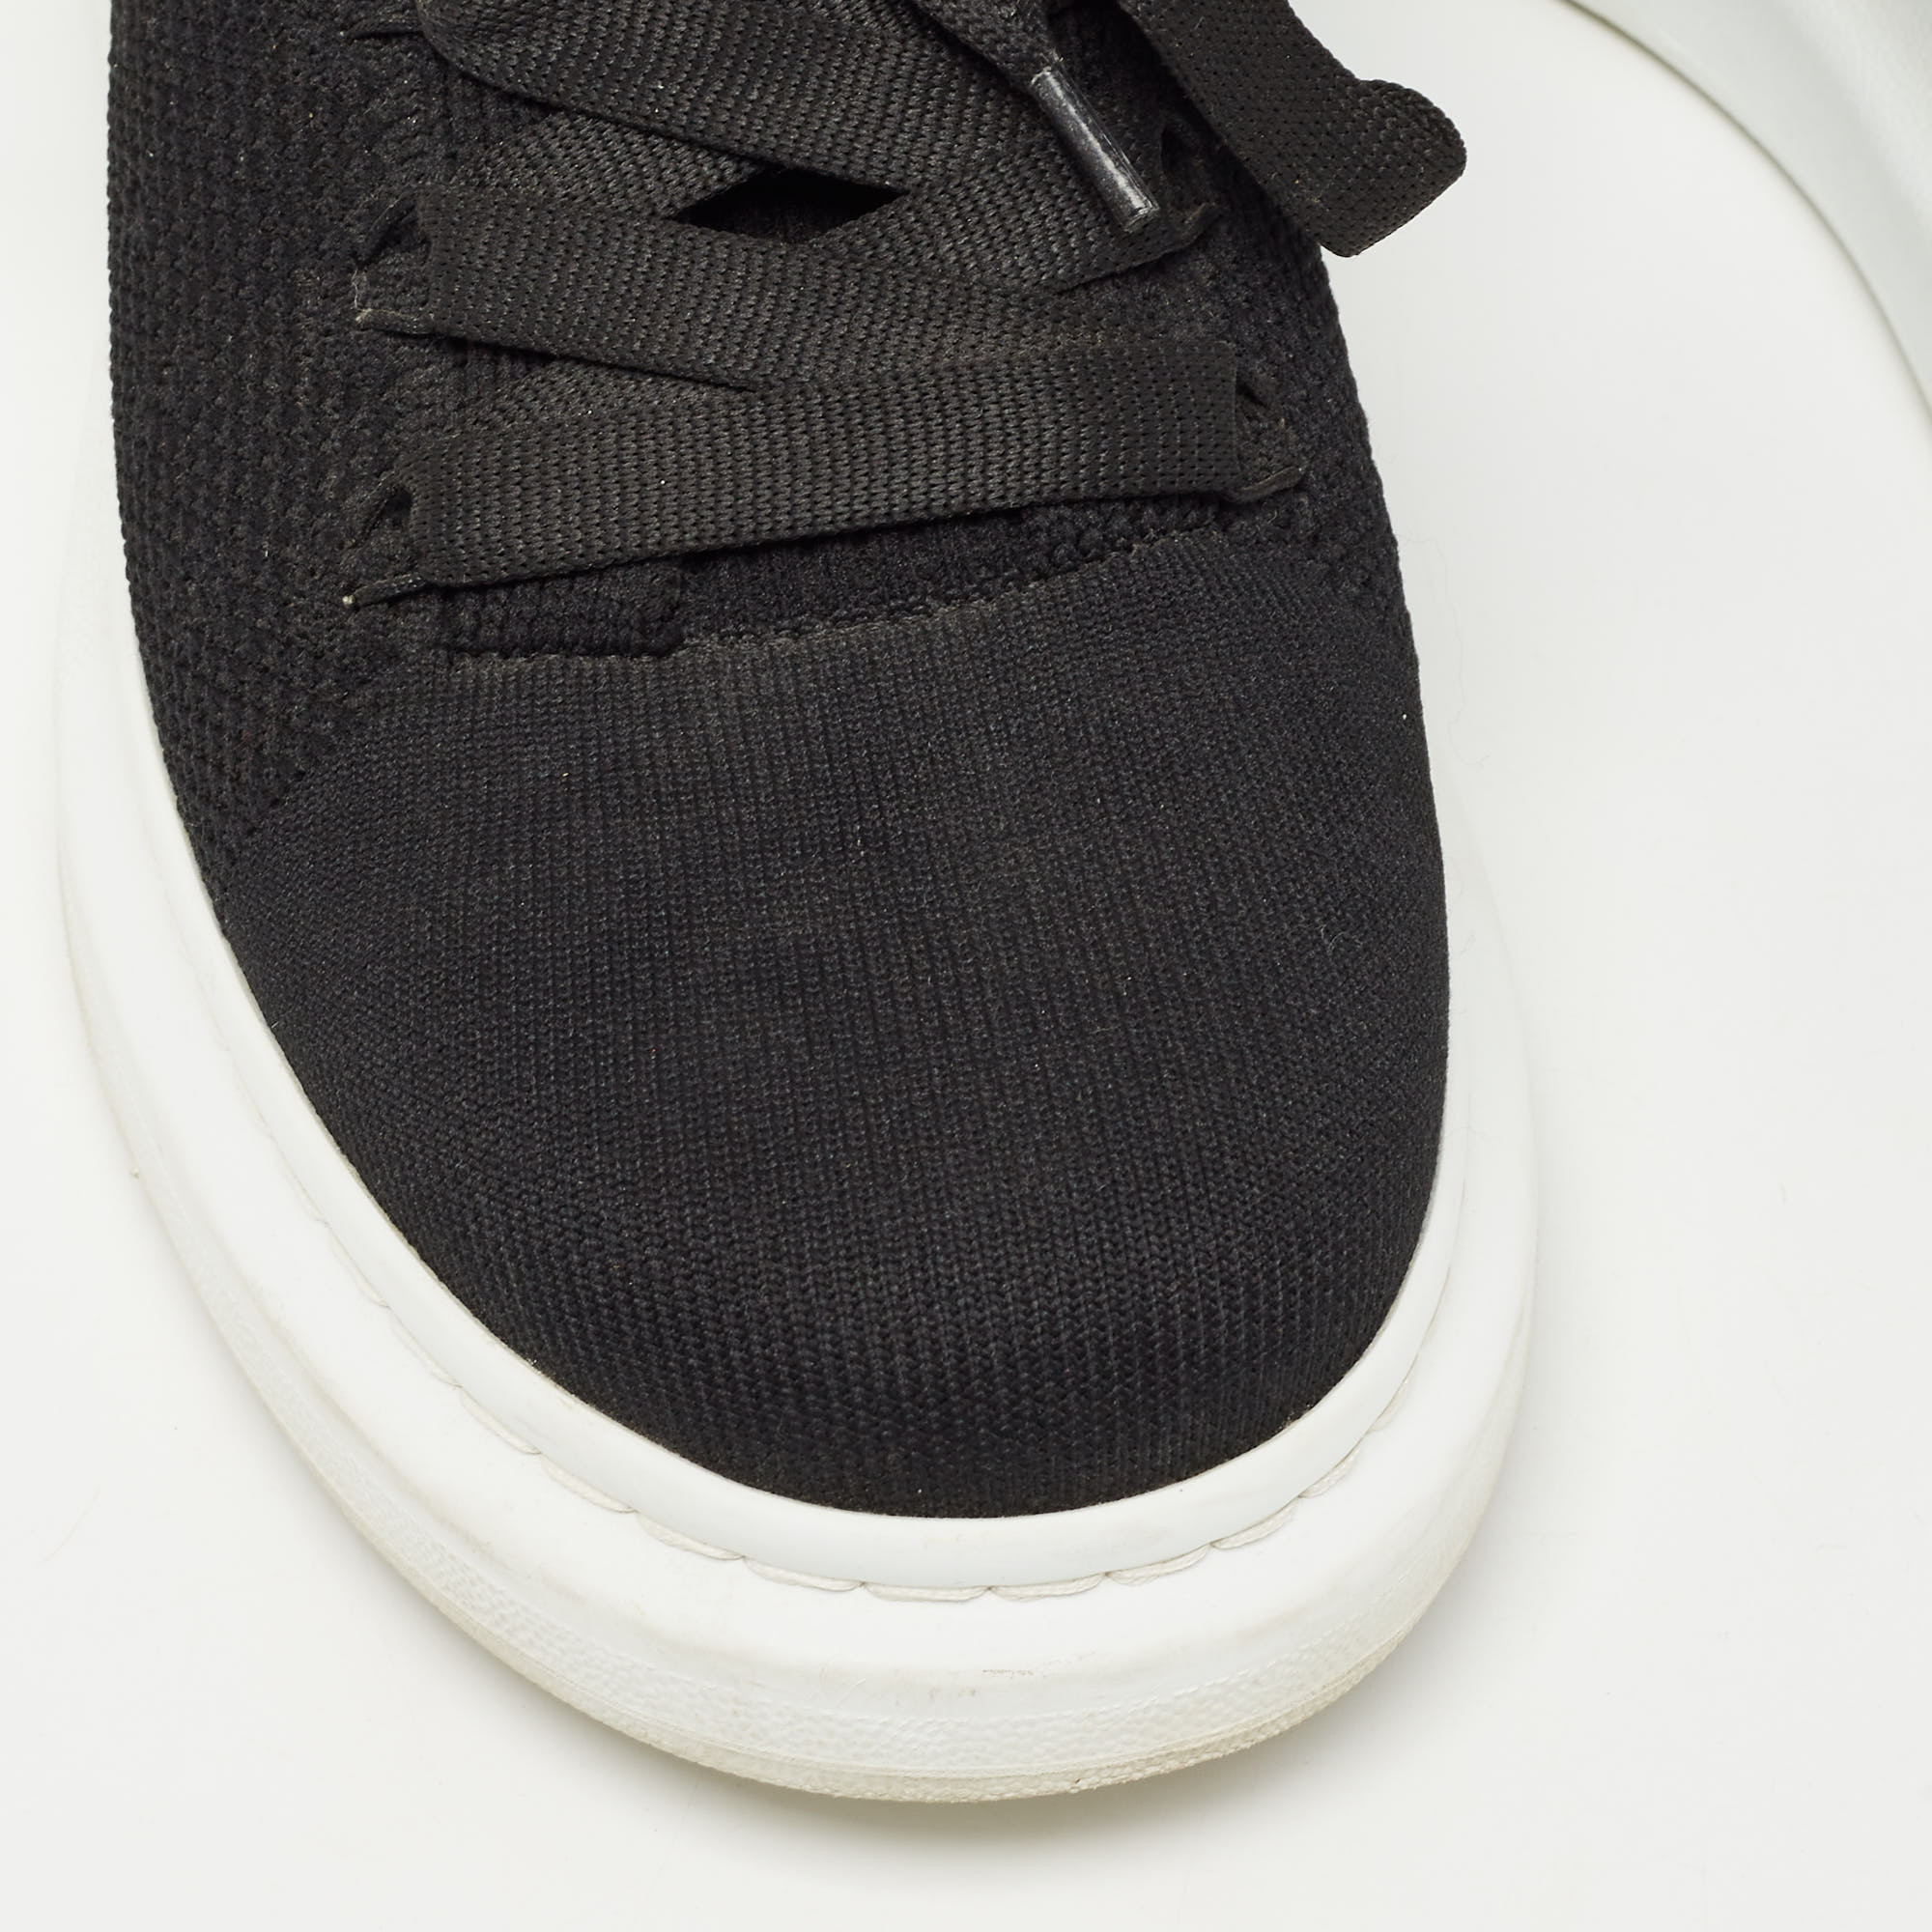 Alexander Mcqueen Black Knit Fabric Low Top Sneakers Size 43